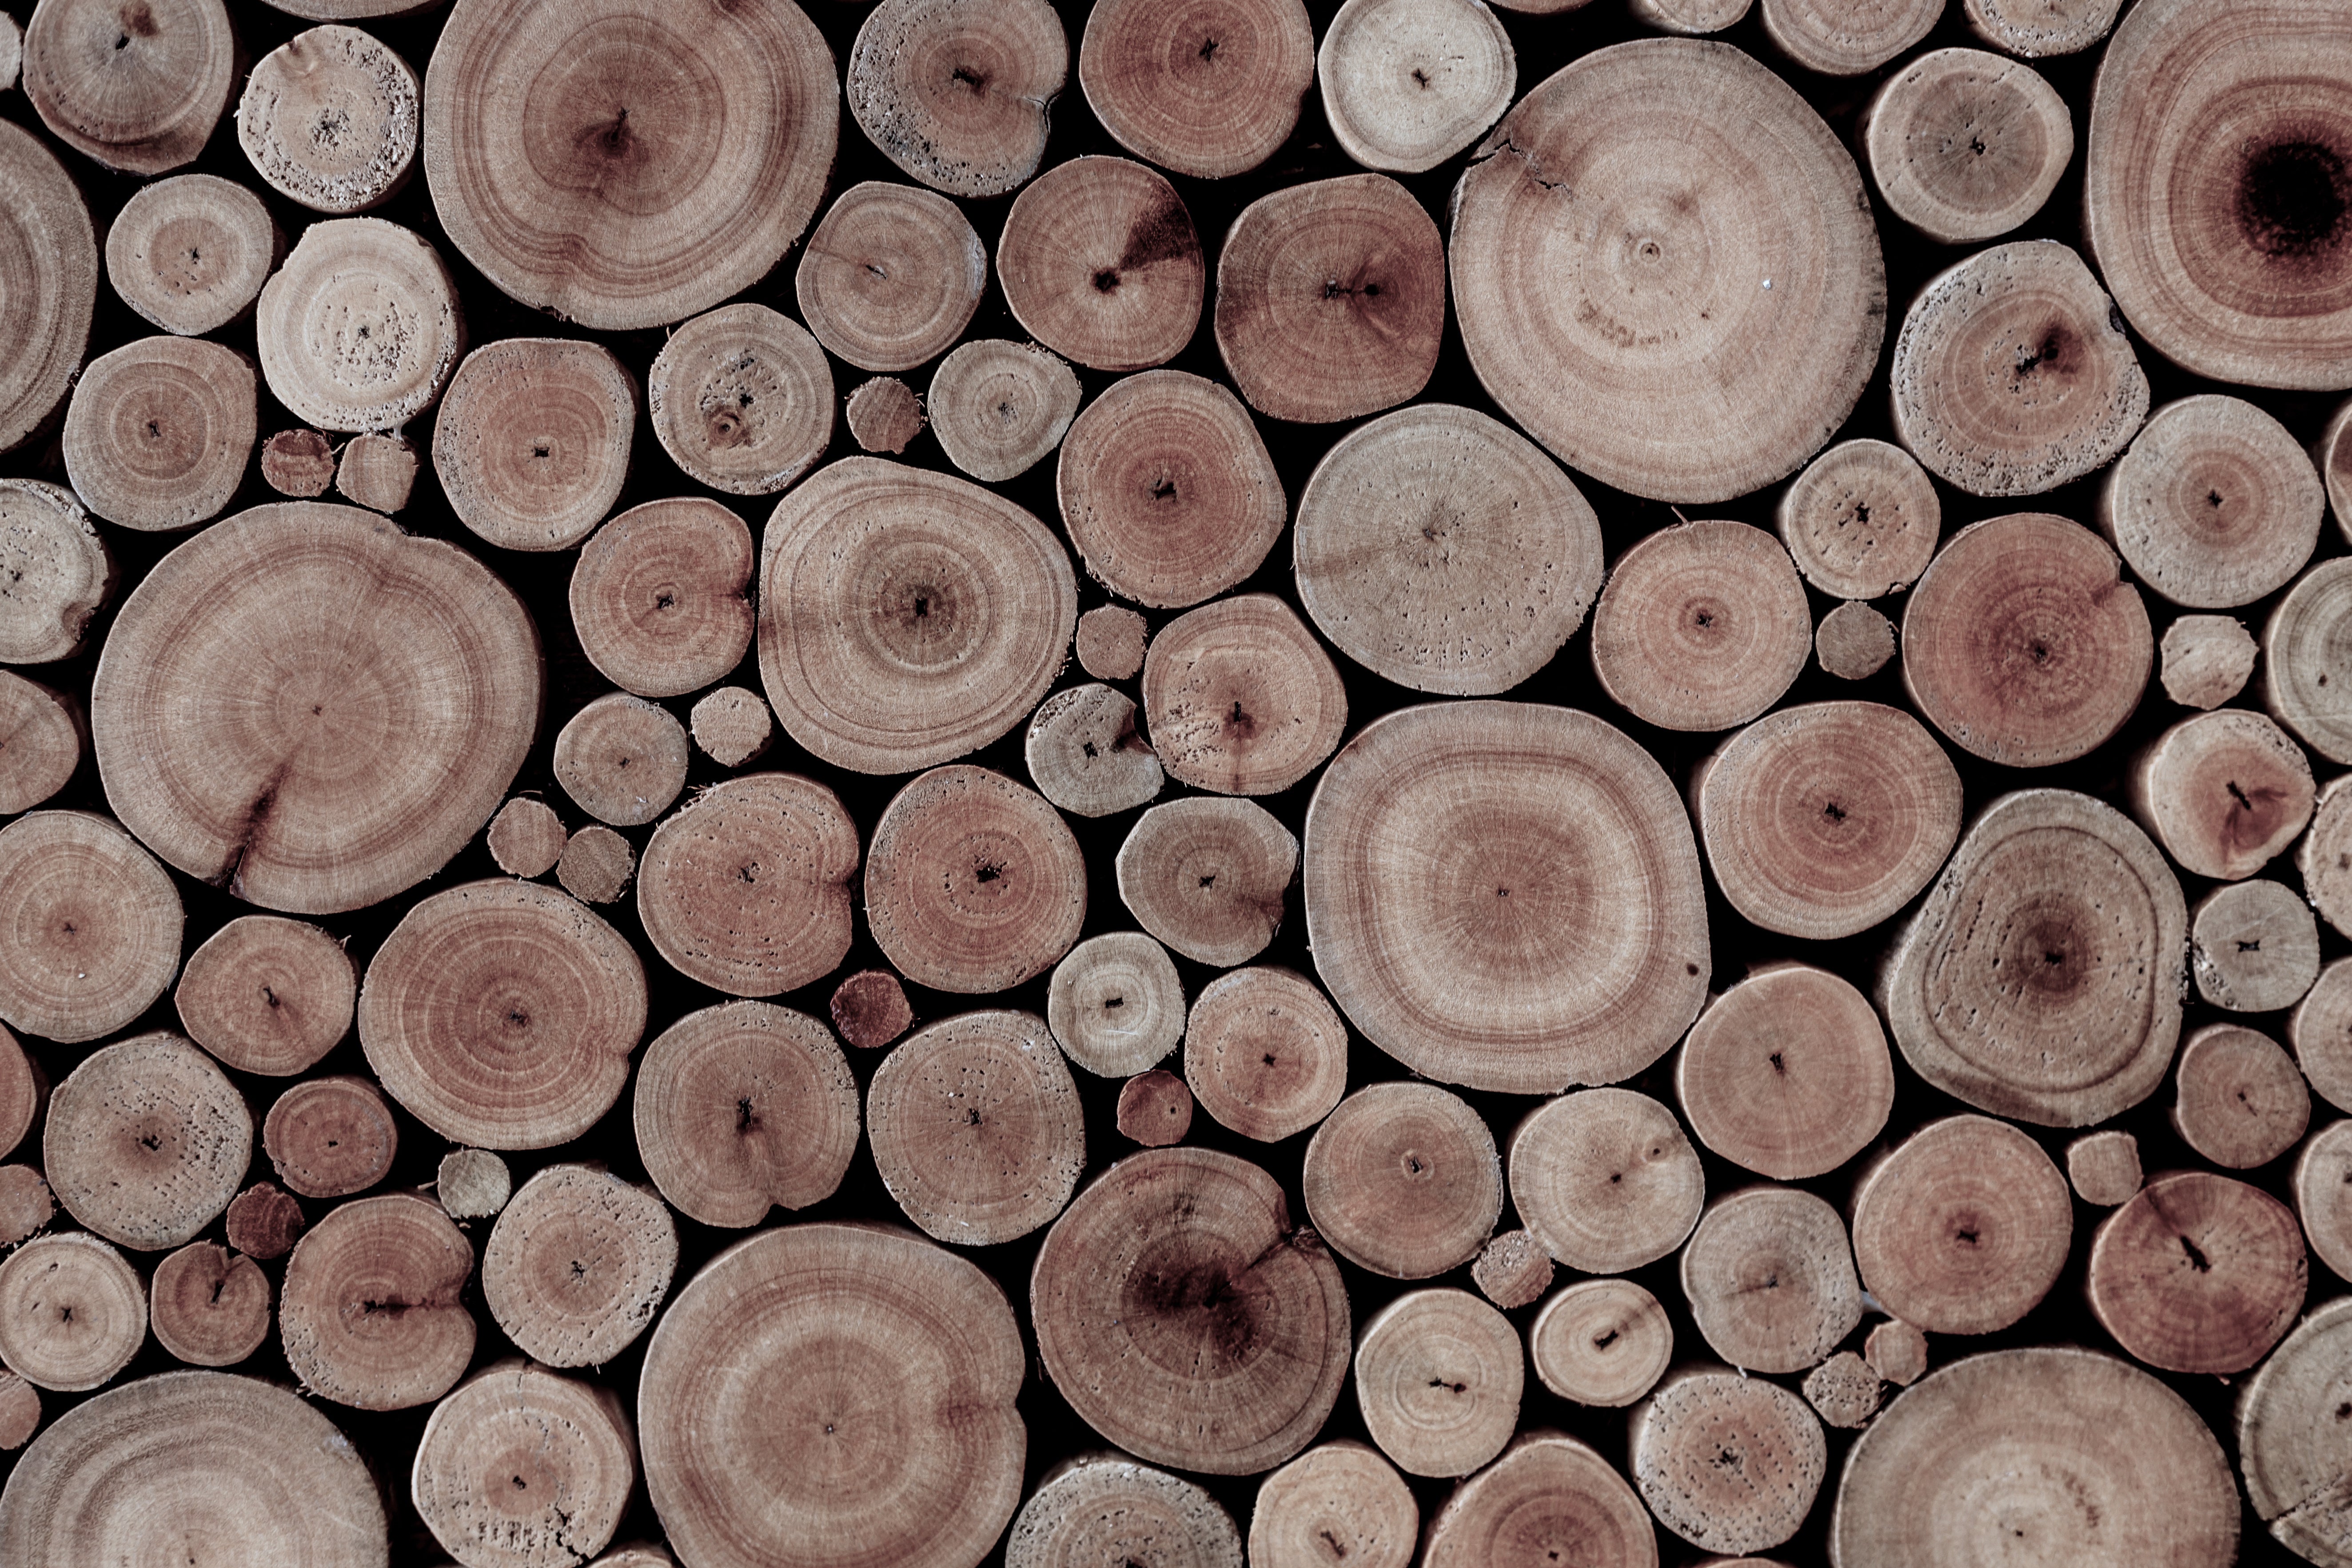 Eucalyptus wood